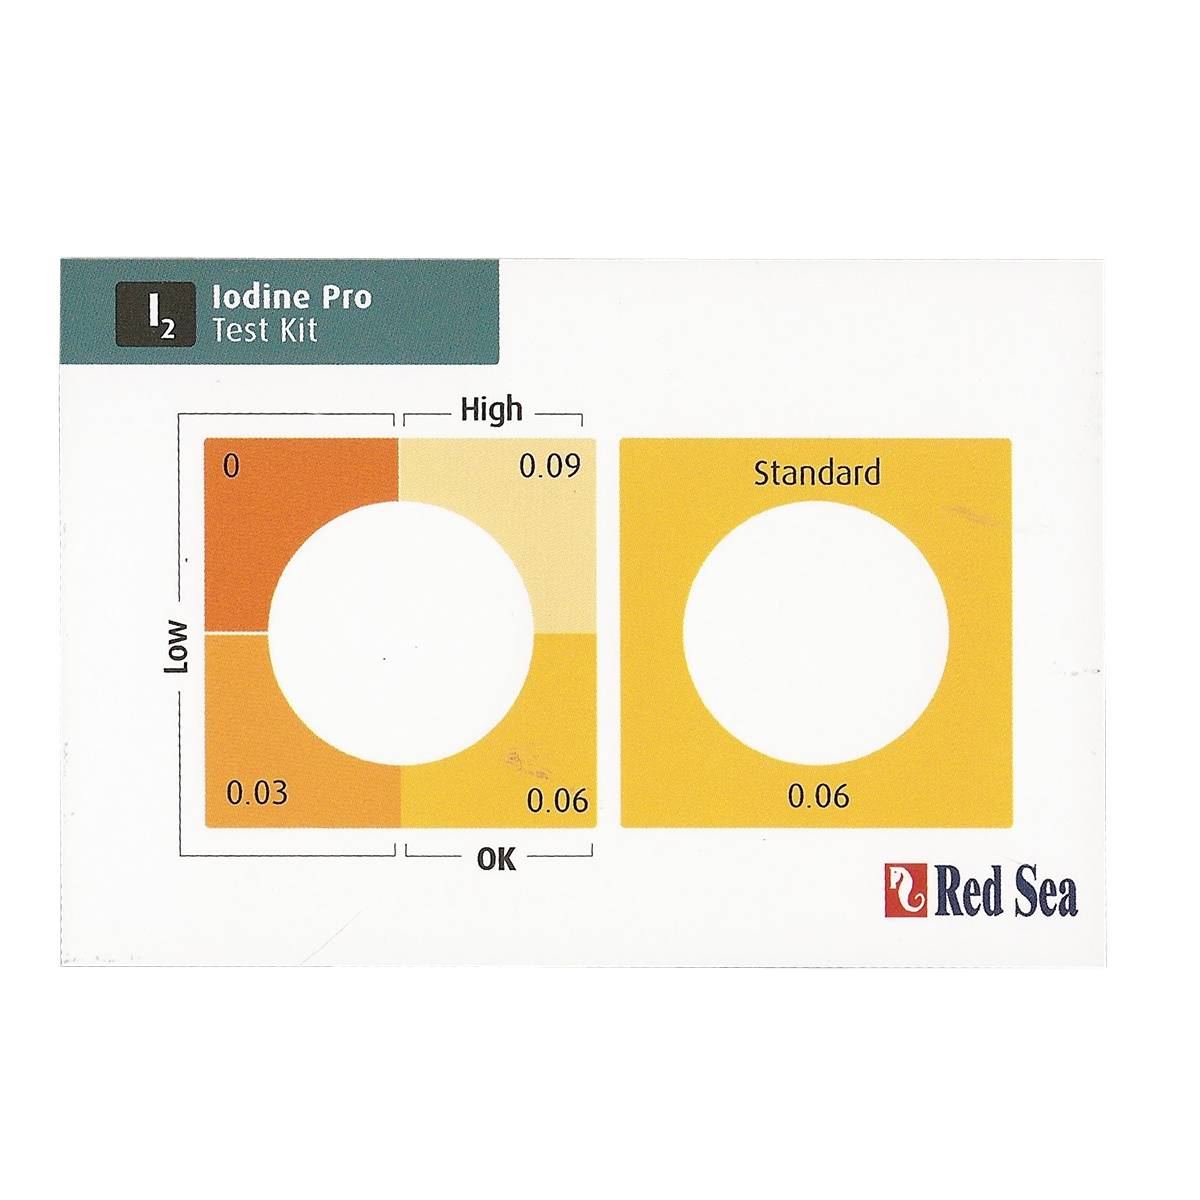 Iodine Pro Test Kit - Red Sea